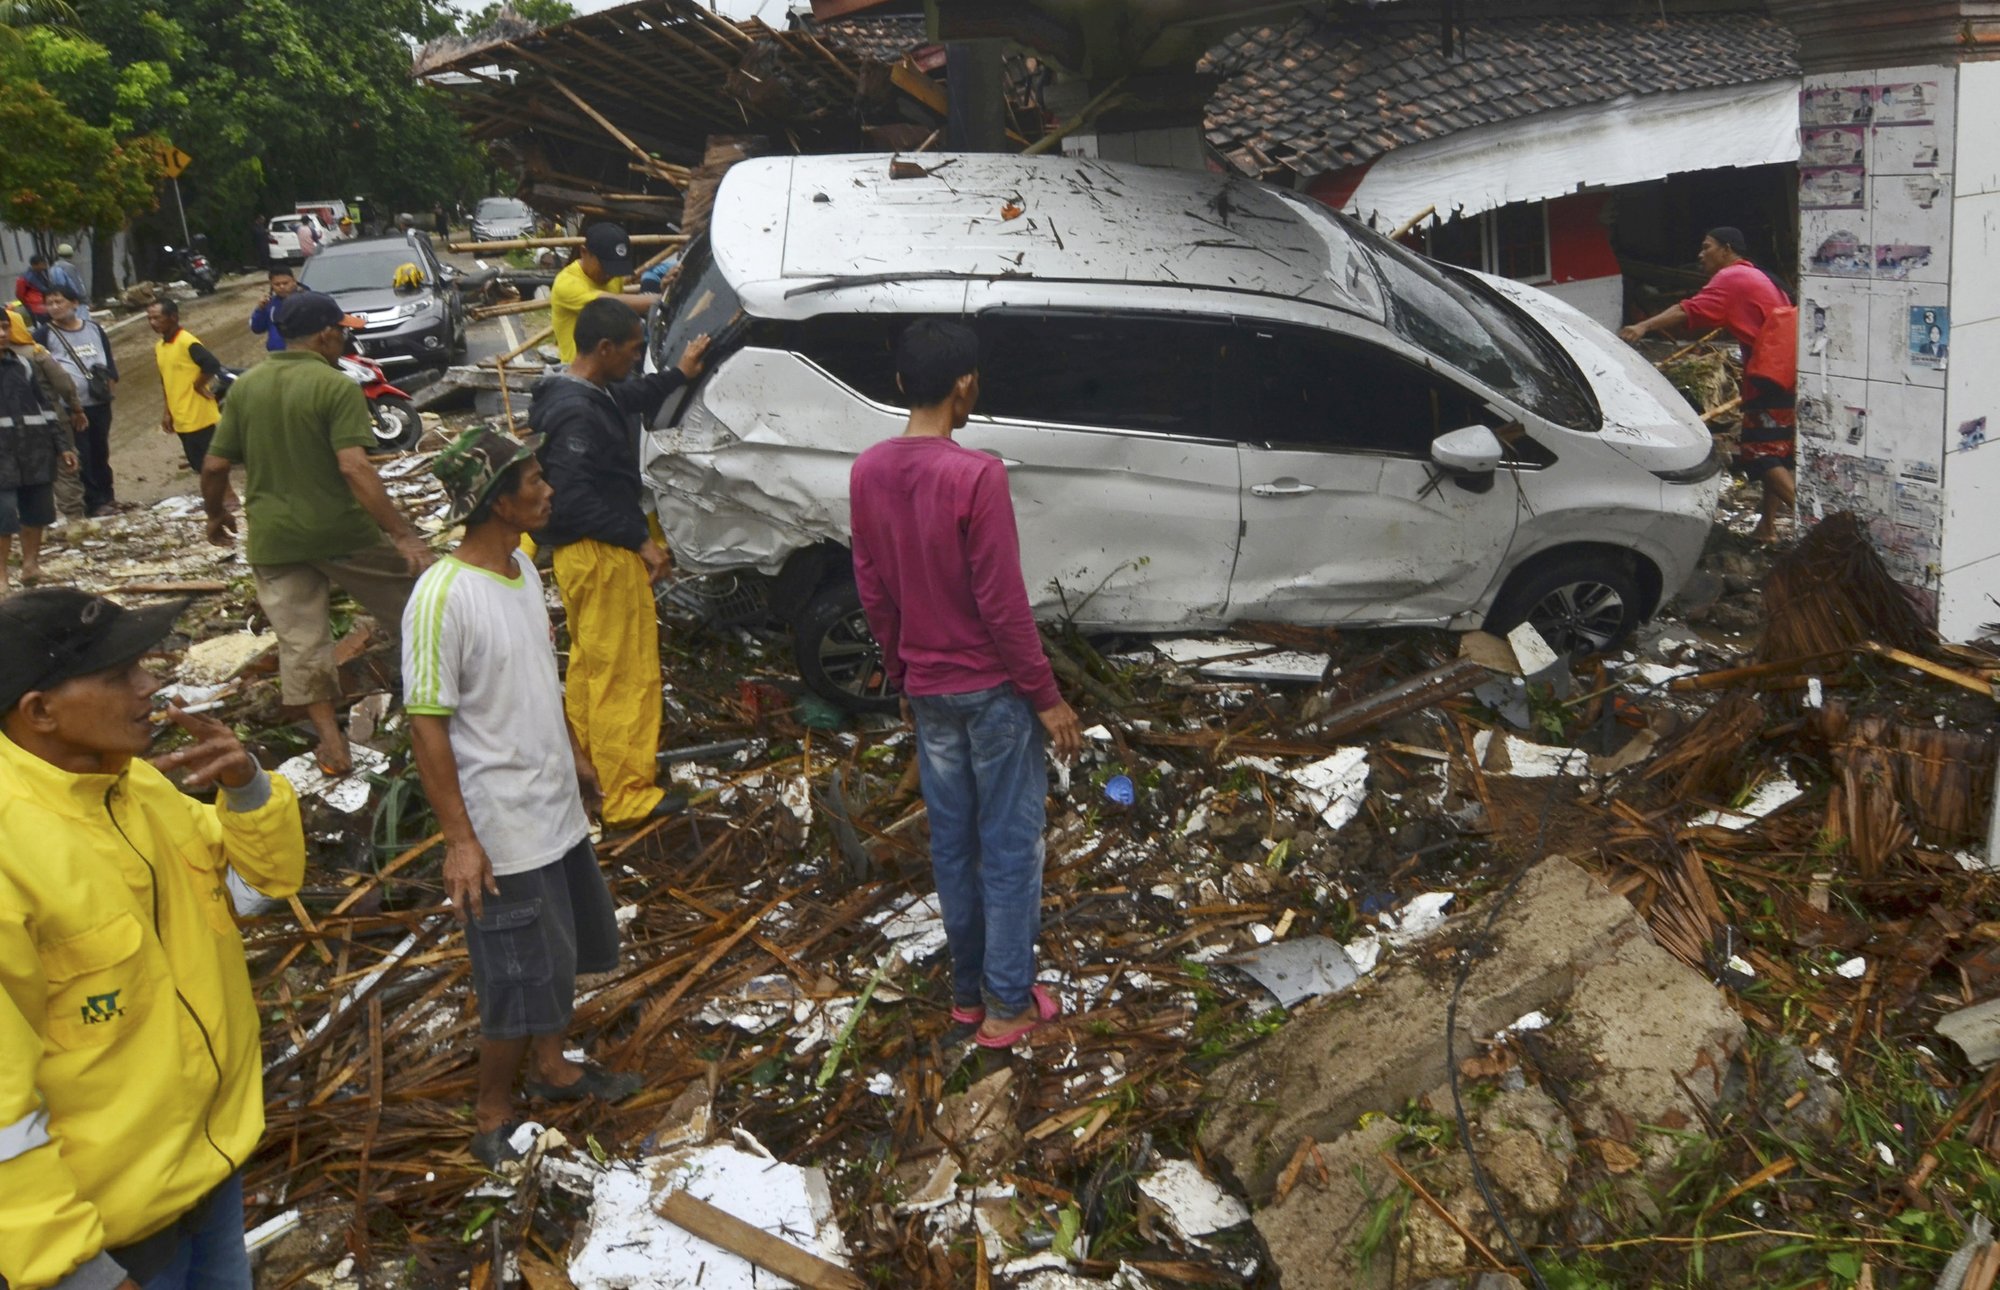 2000 - Tsunami hits Indonesia, killing over 220